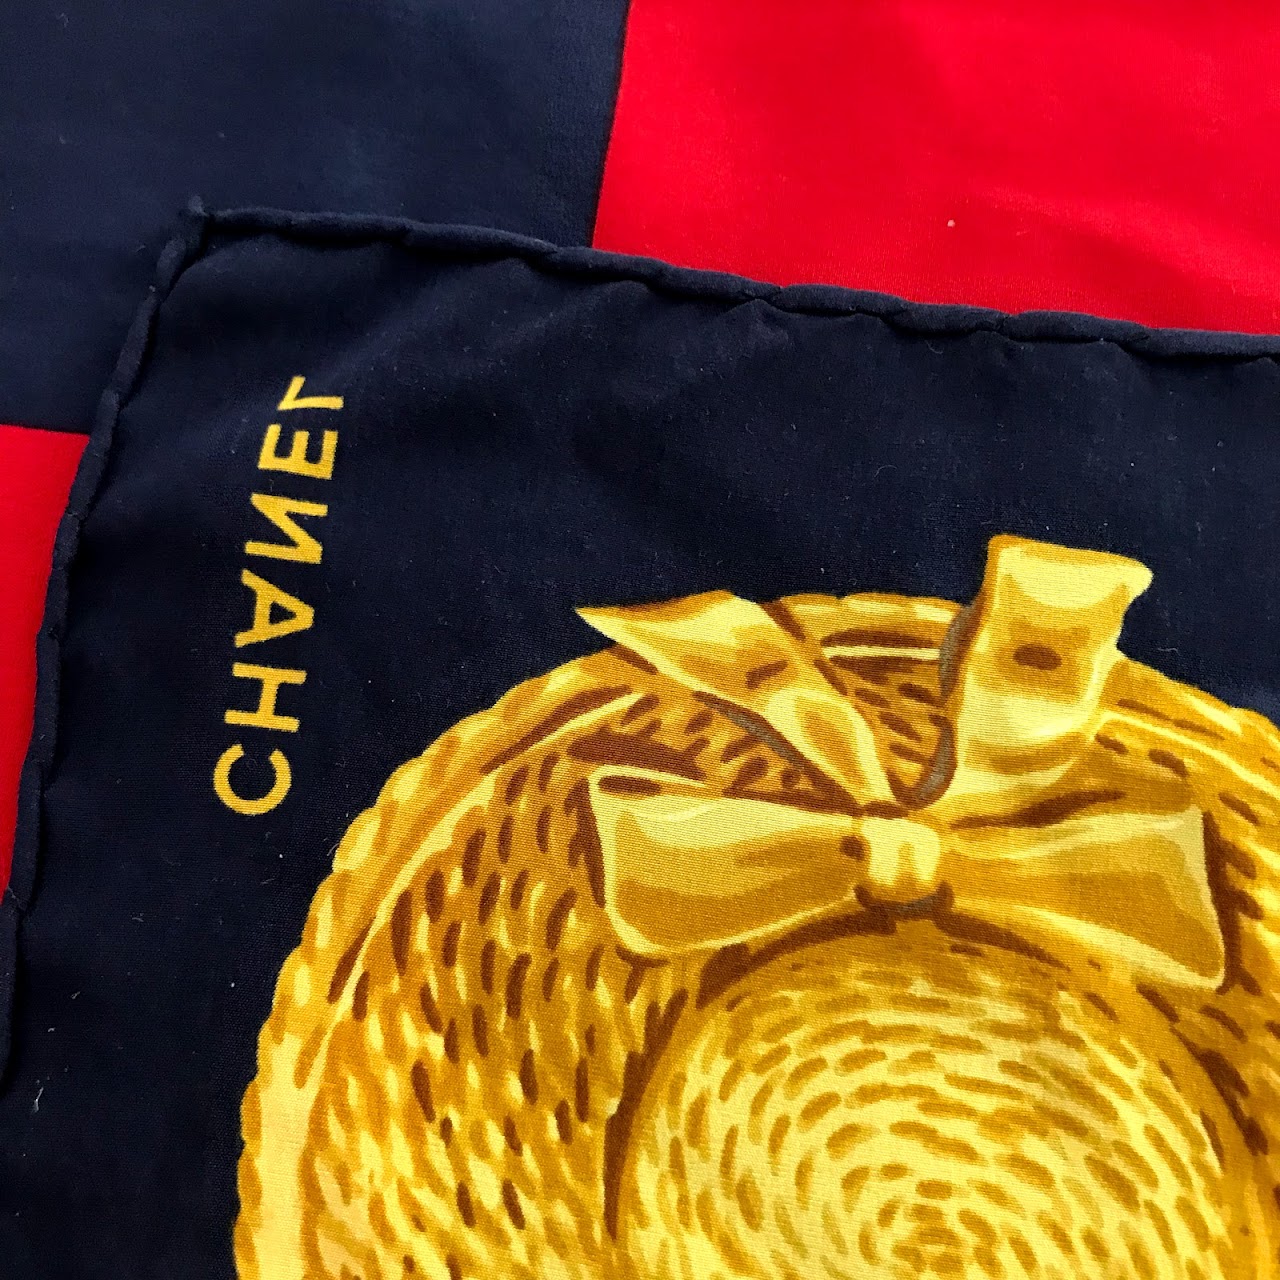 Chanel Icons Silk Scarf